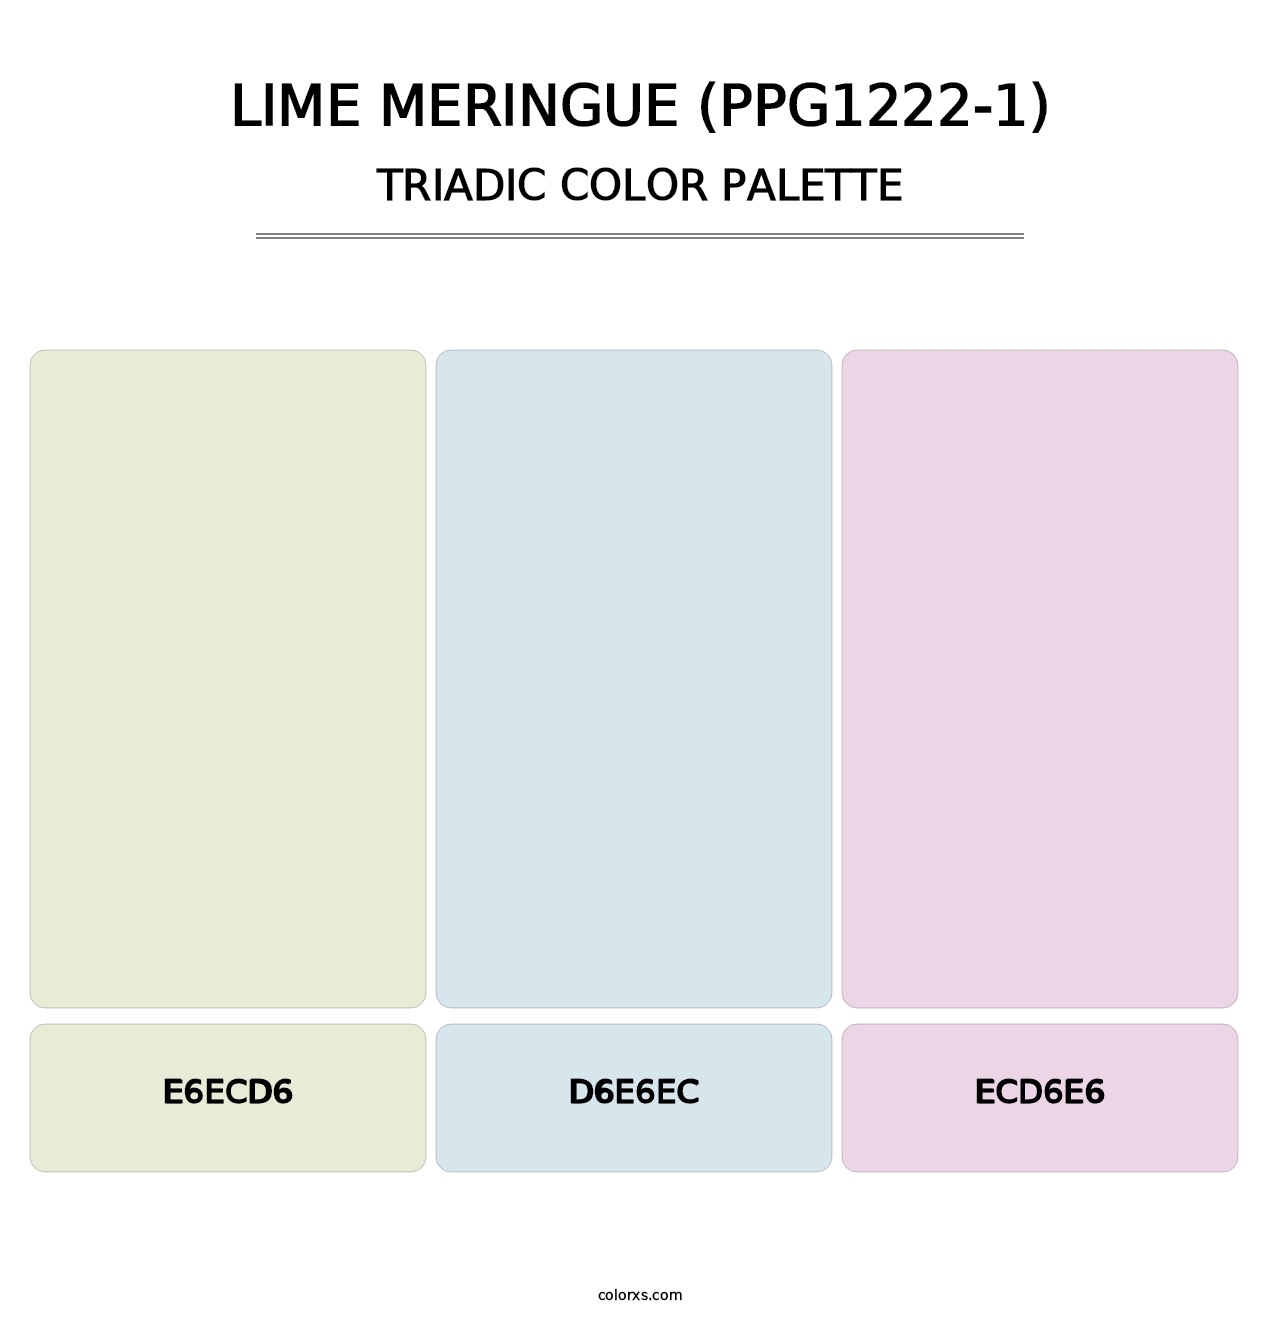 Lime Meringue (PPG1222-1) - Triadic Color Palette